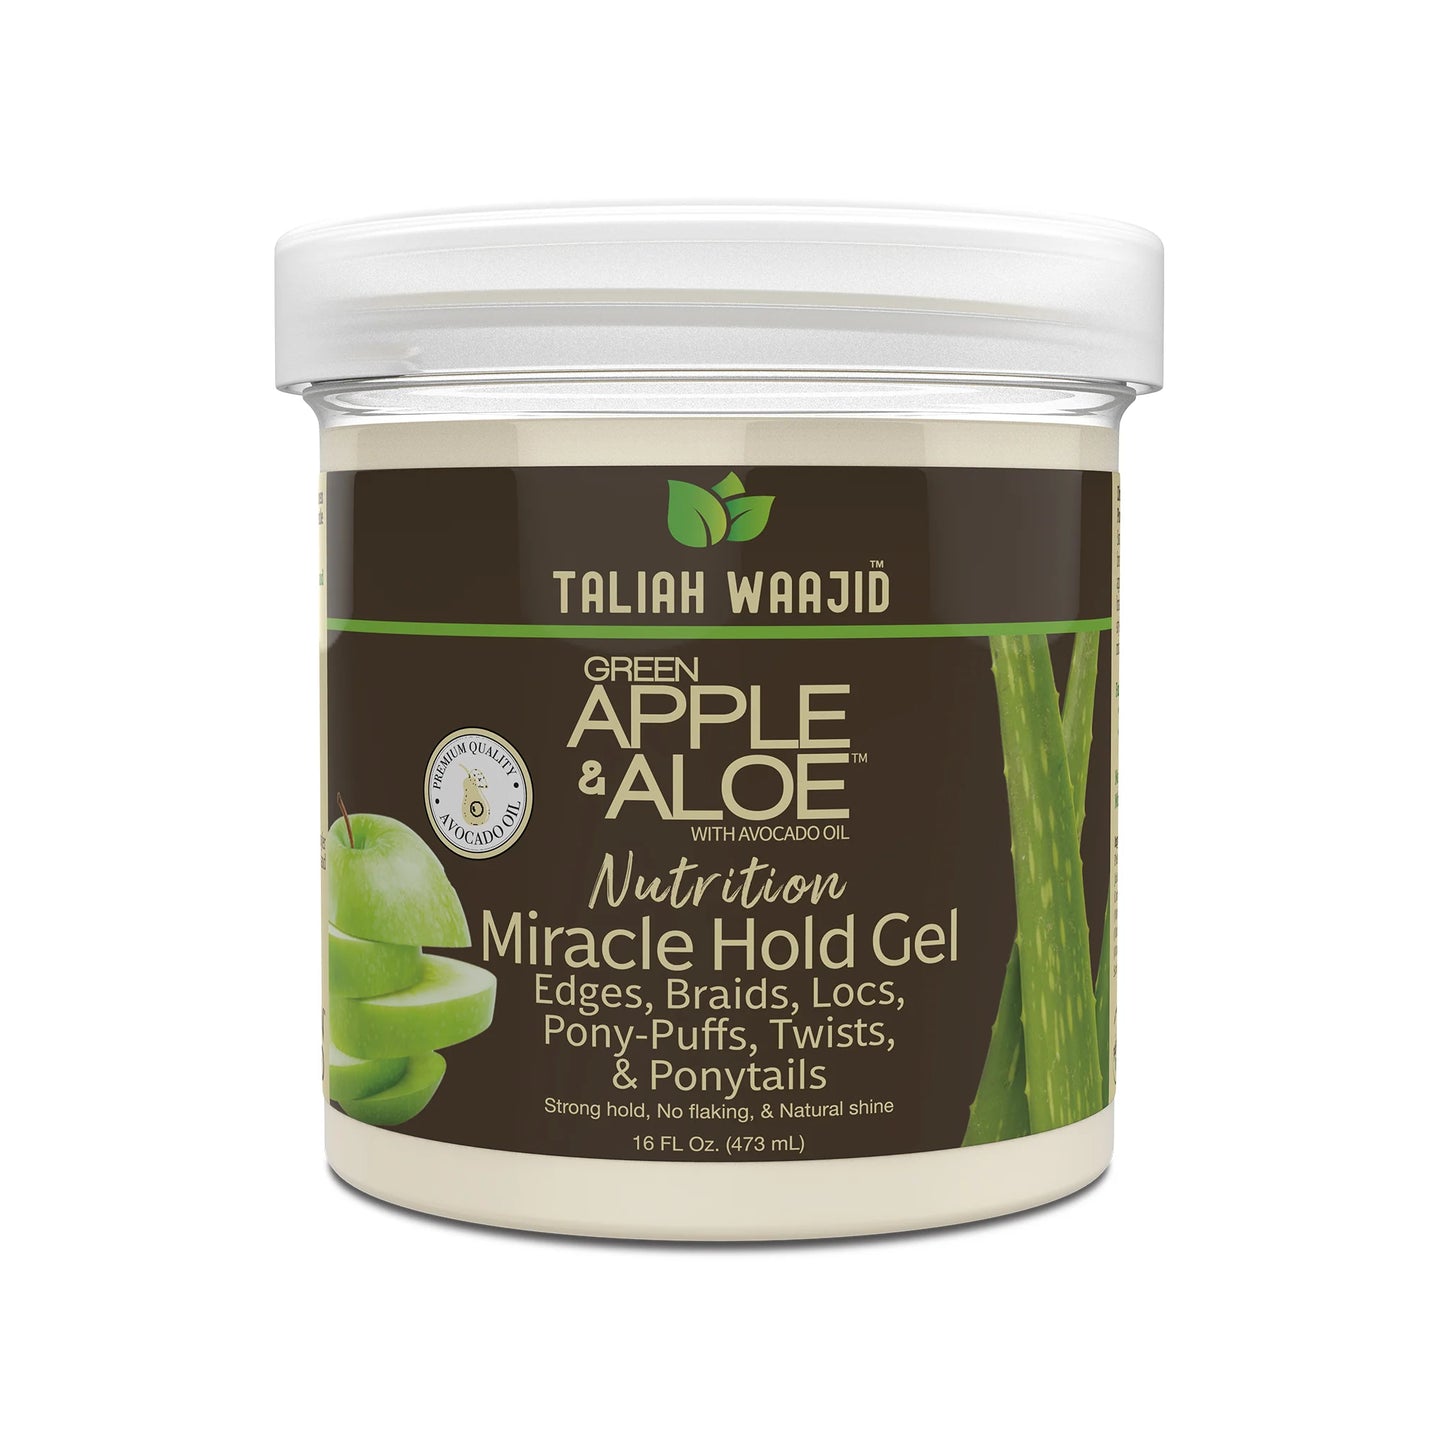 Green Apple & Aloe Nutrition Miracle Hold Gel 16oz